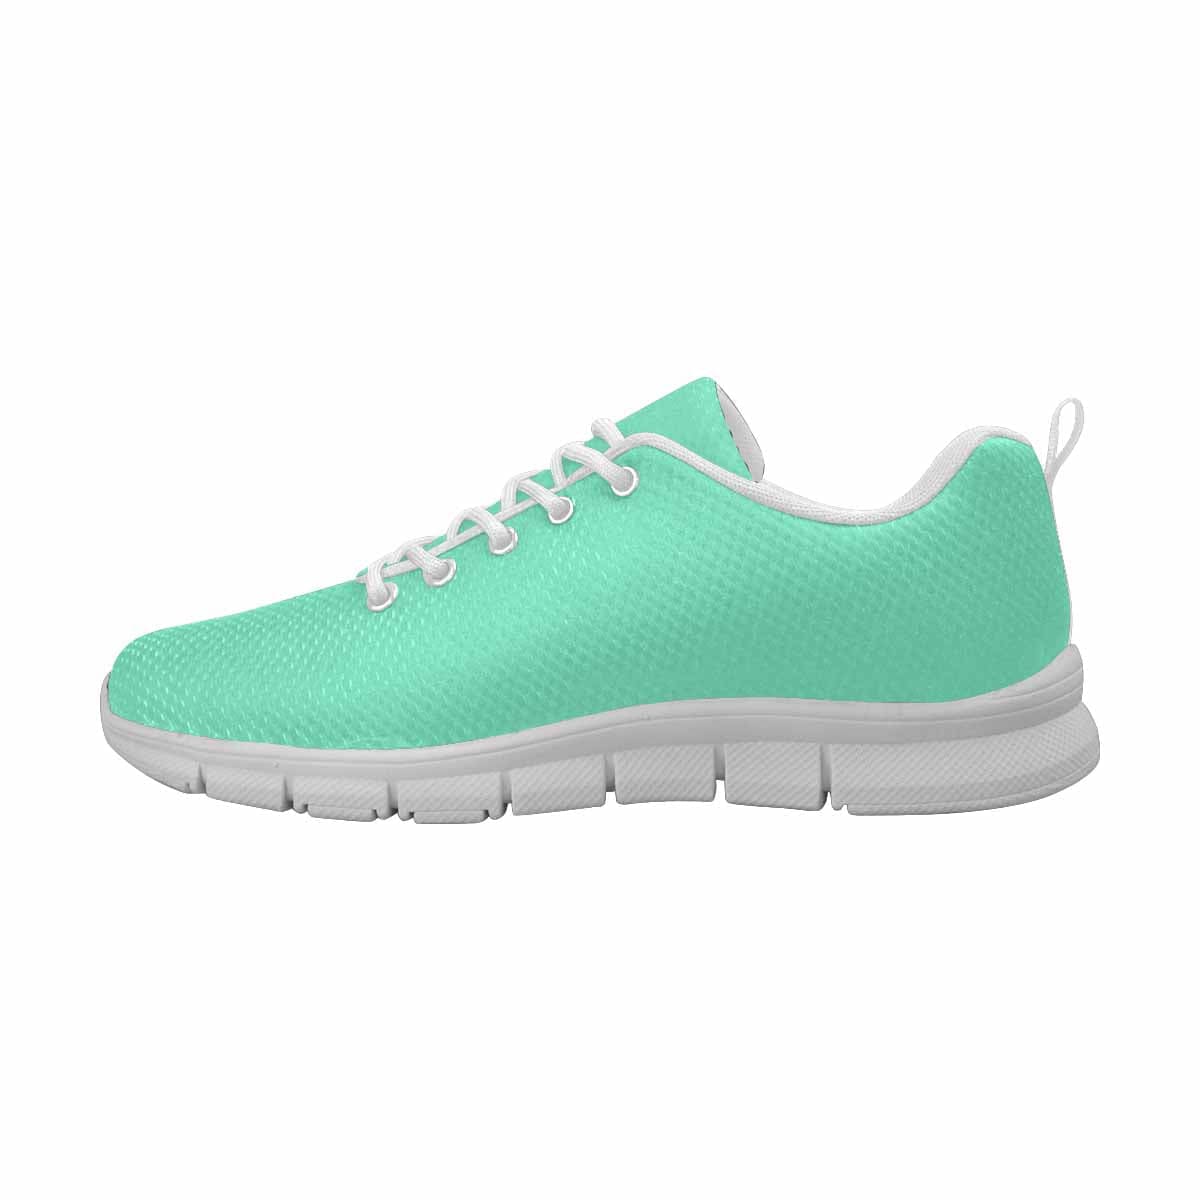 Sneakers For Men Aquamarine Green - Running Shoes - Mens | Sneakers | Running